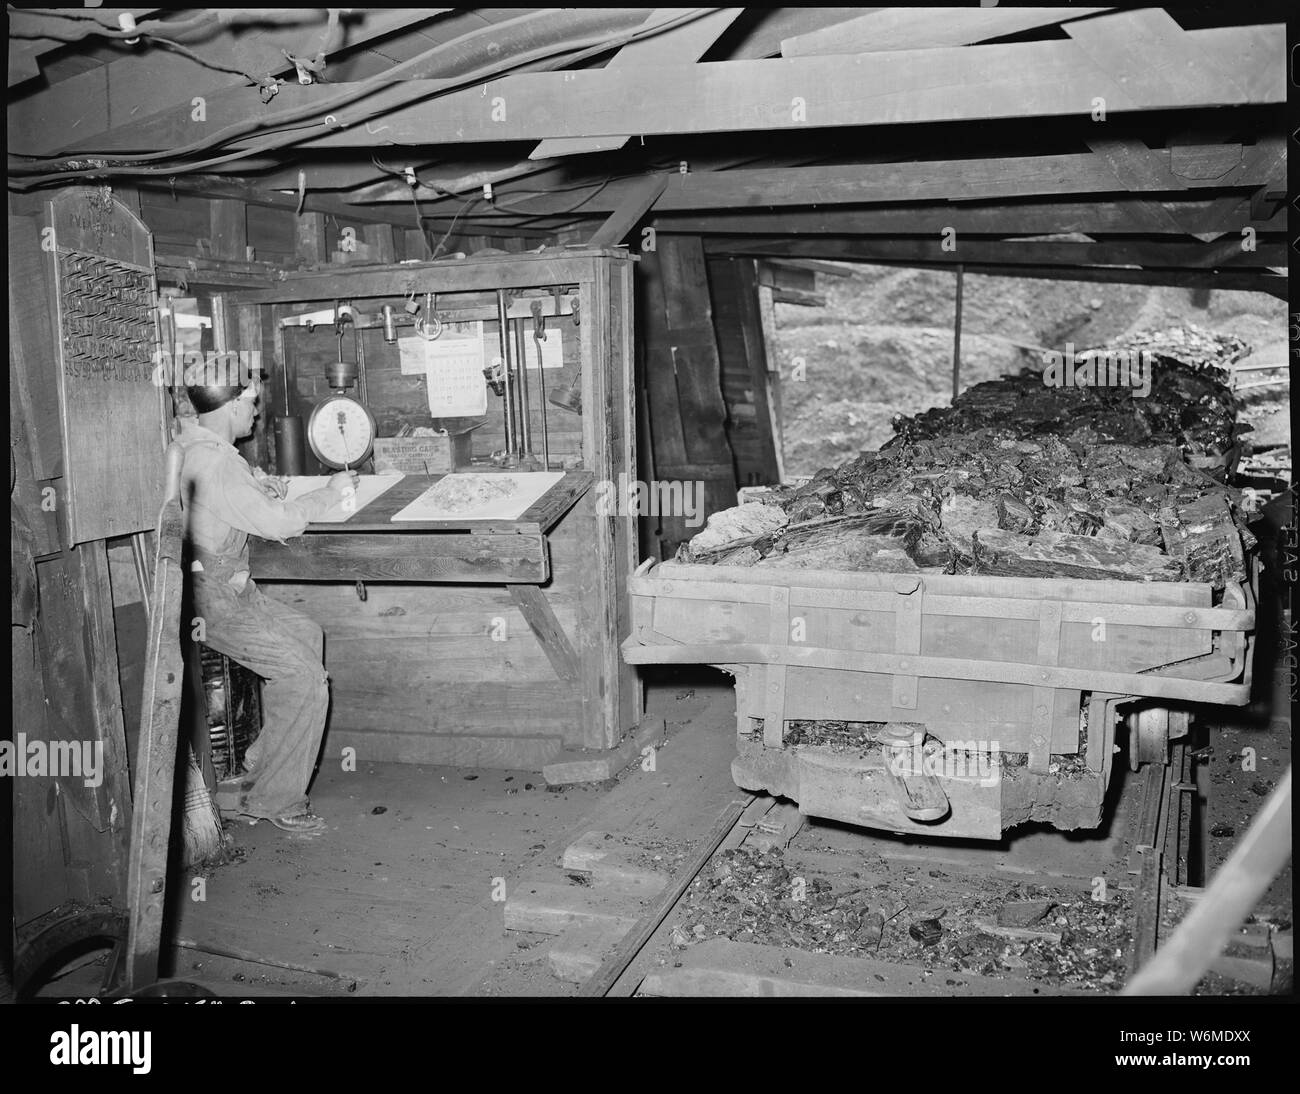 The check weighman at the tipple. P V & K Coal Company, Clover Gap Mine, Lejunior, Harlan County, Kentucky. Stock Photo